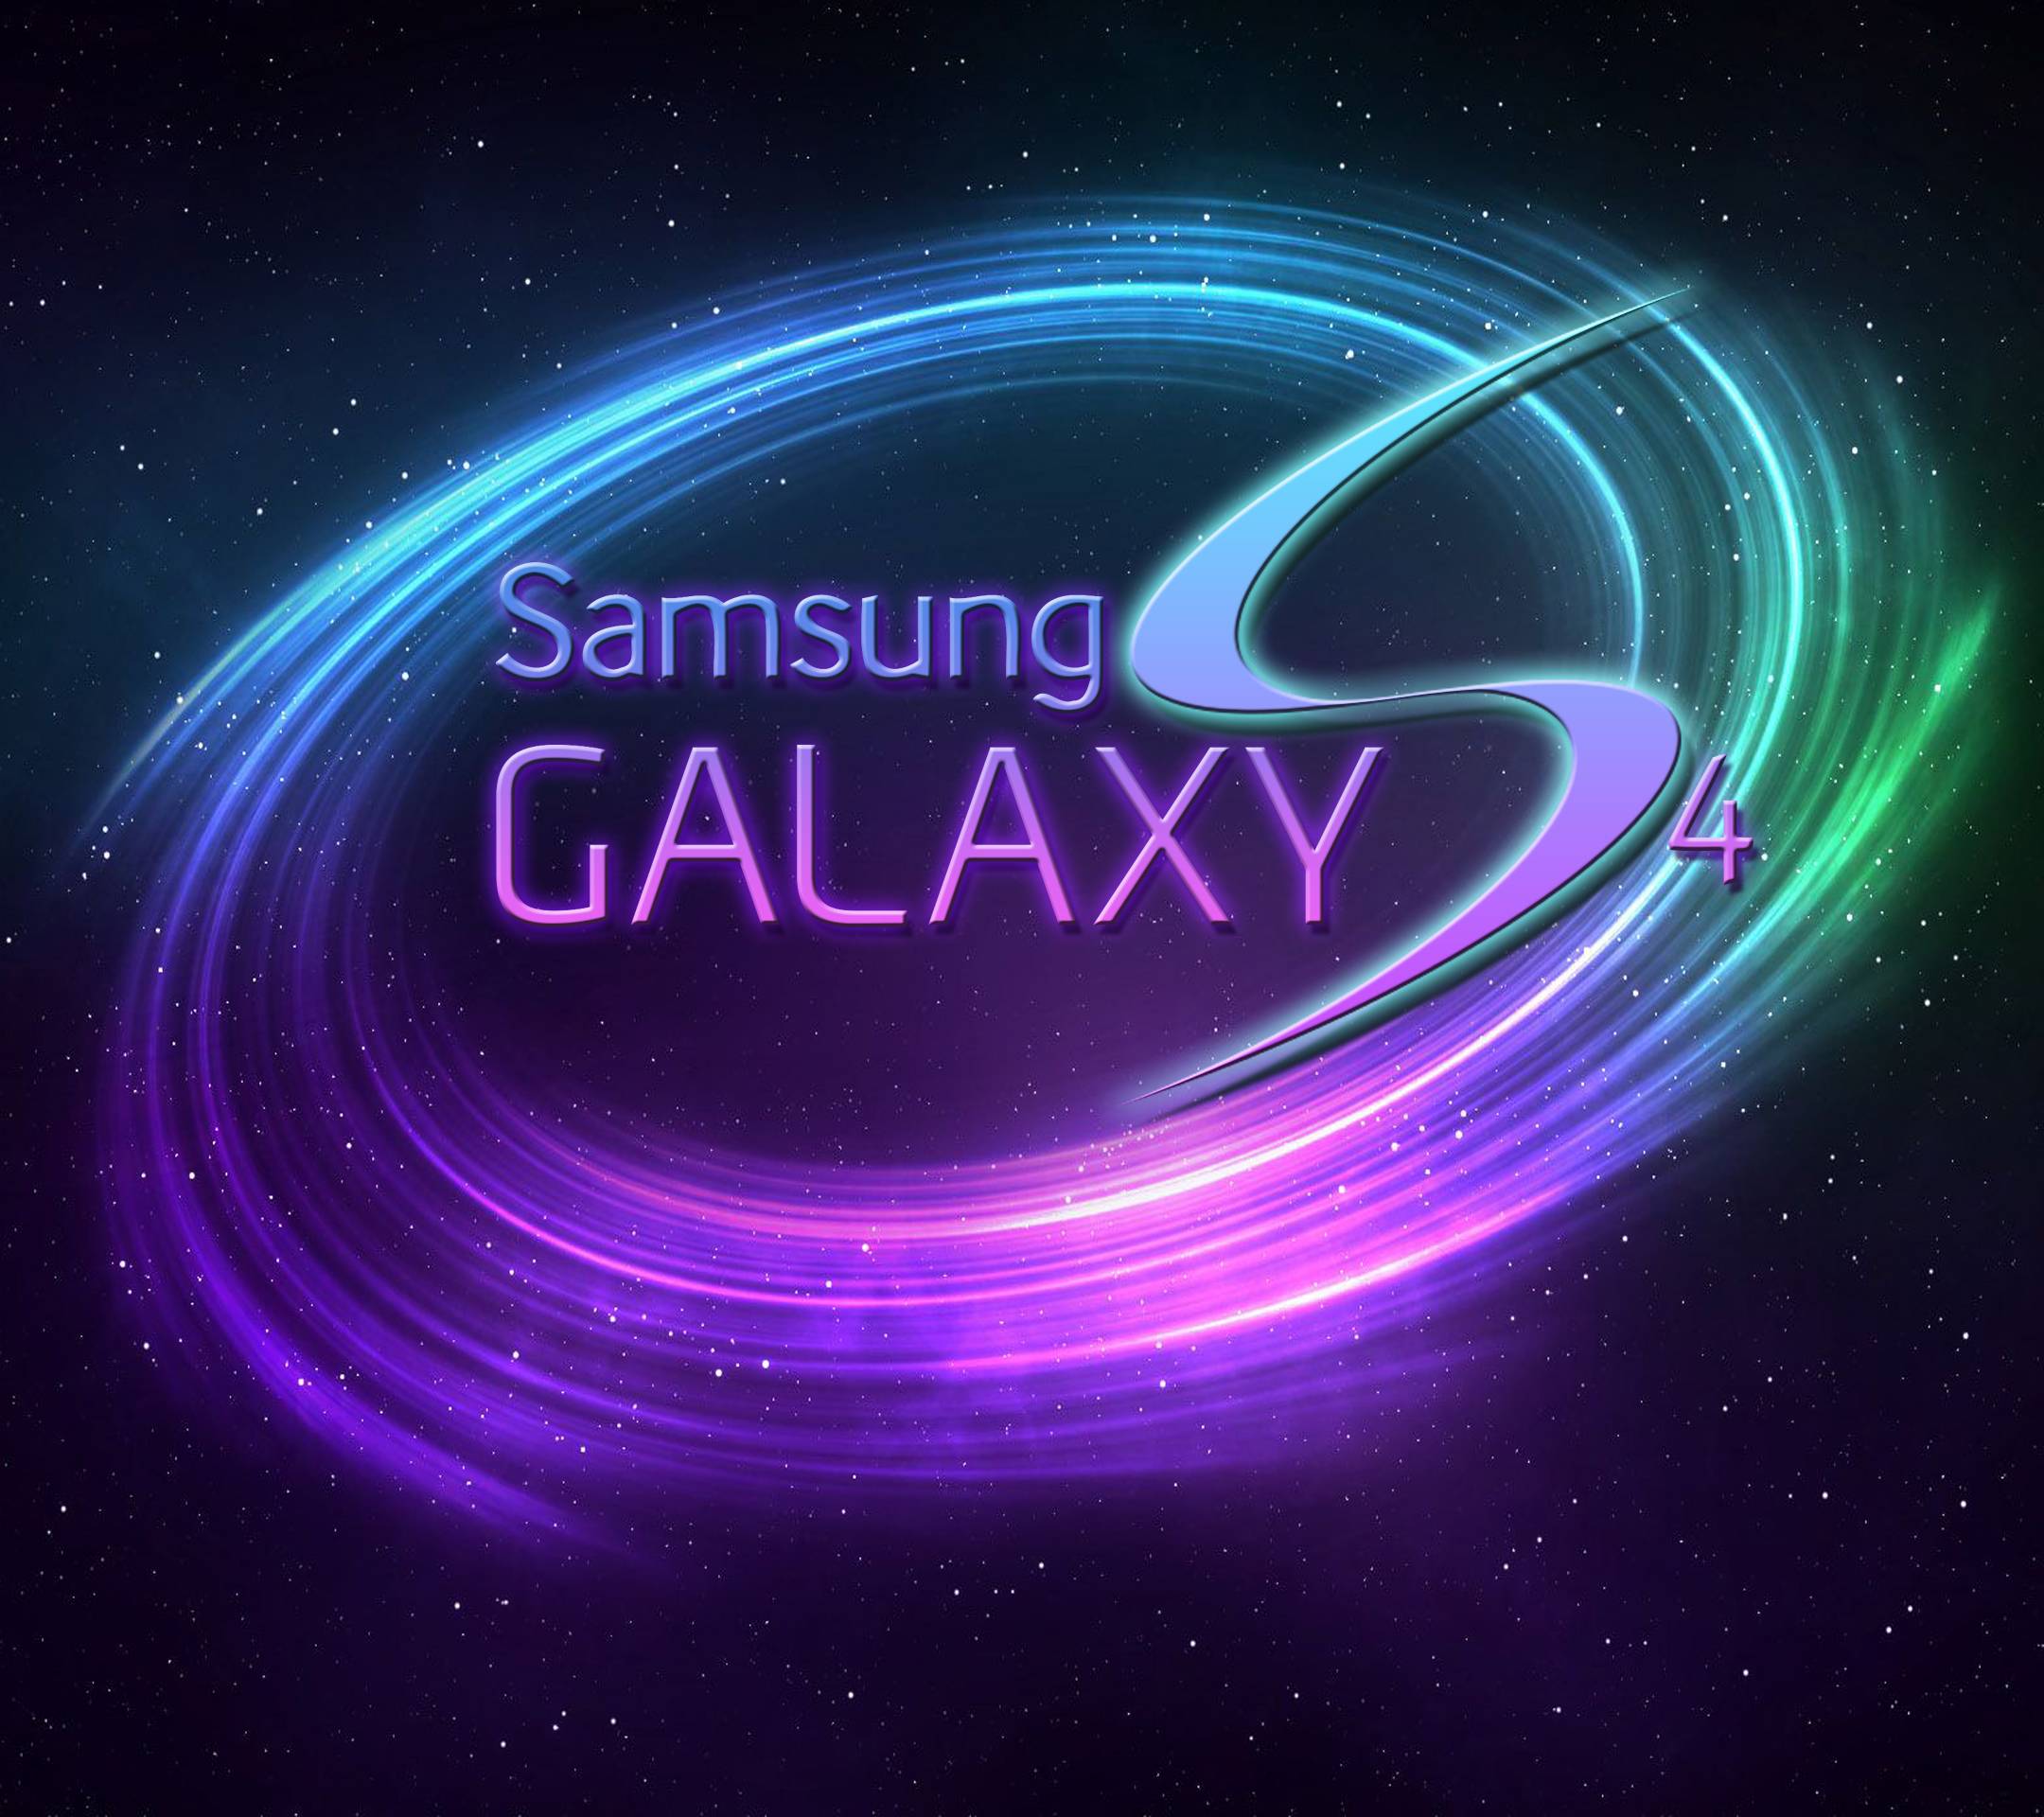 Samsung Galaxy Phone Logo - Samsung galaxy Logos